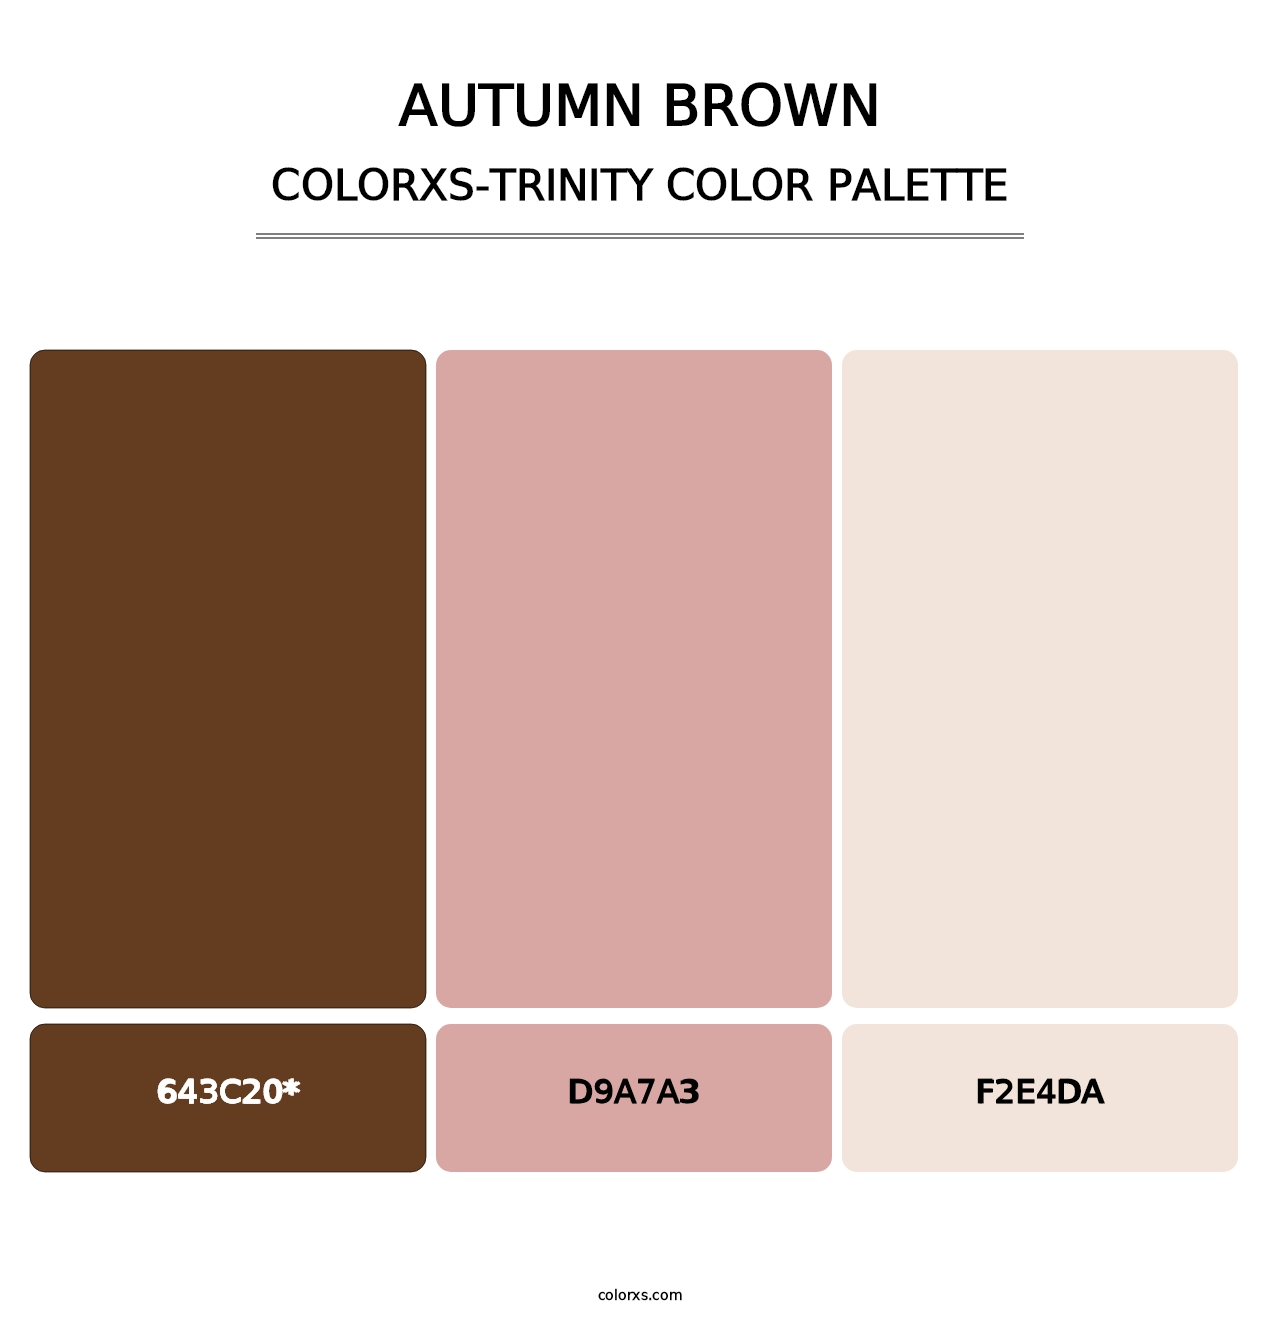 Autumn Brown - Colorxs Trinity Palette